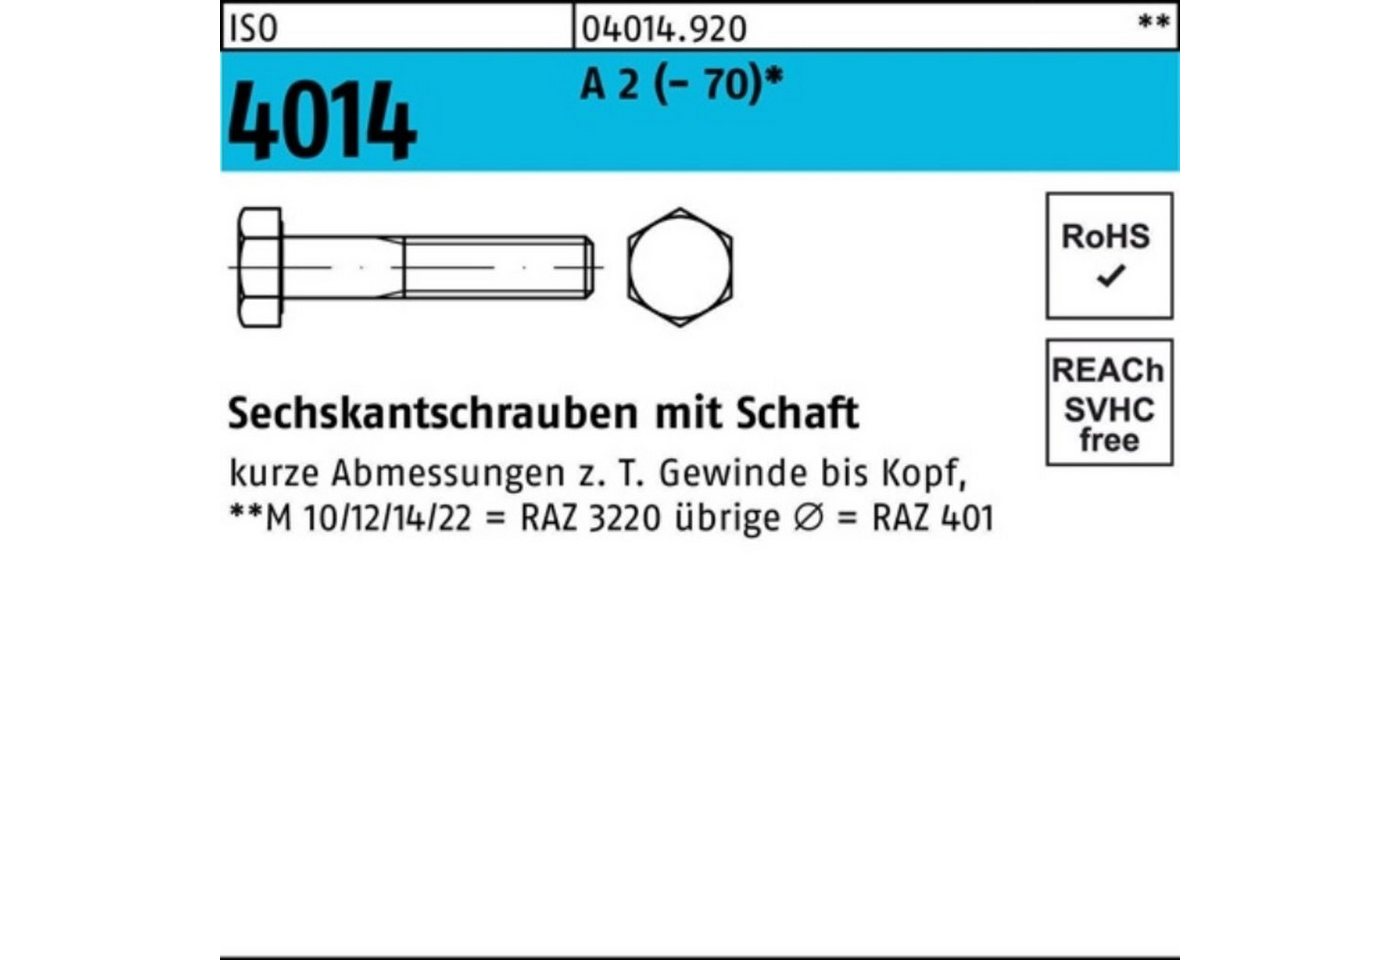 Bufab Sechskantschraube 100er Pack Sechskantschraube ISO 4014 Schaft M24x 190 A 2 (70) 1 St von Bufab